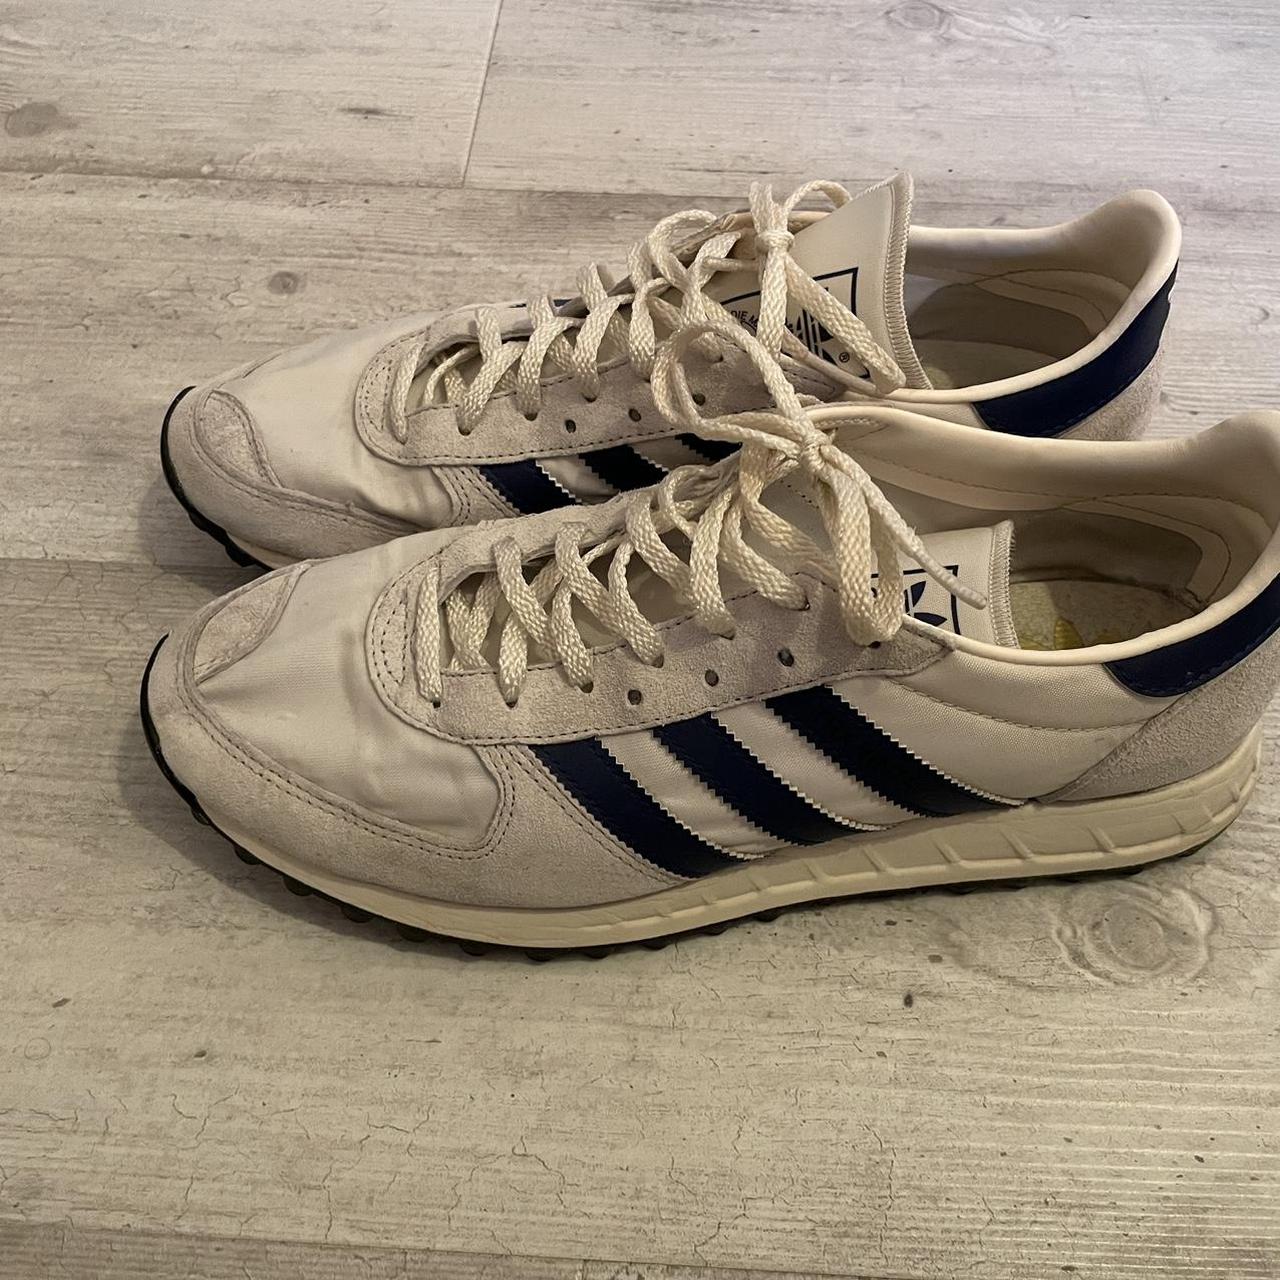 Adidas trx vintage trainers size uk 9. No box. Sold... - Depop